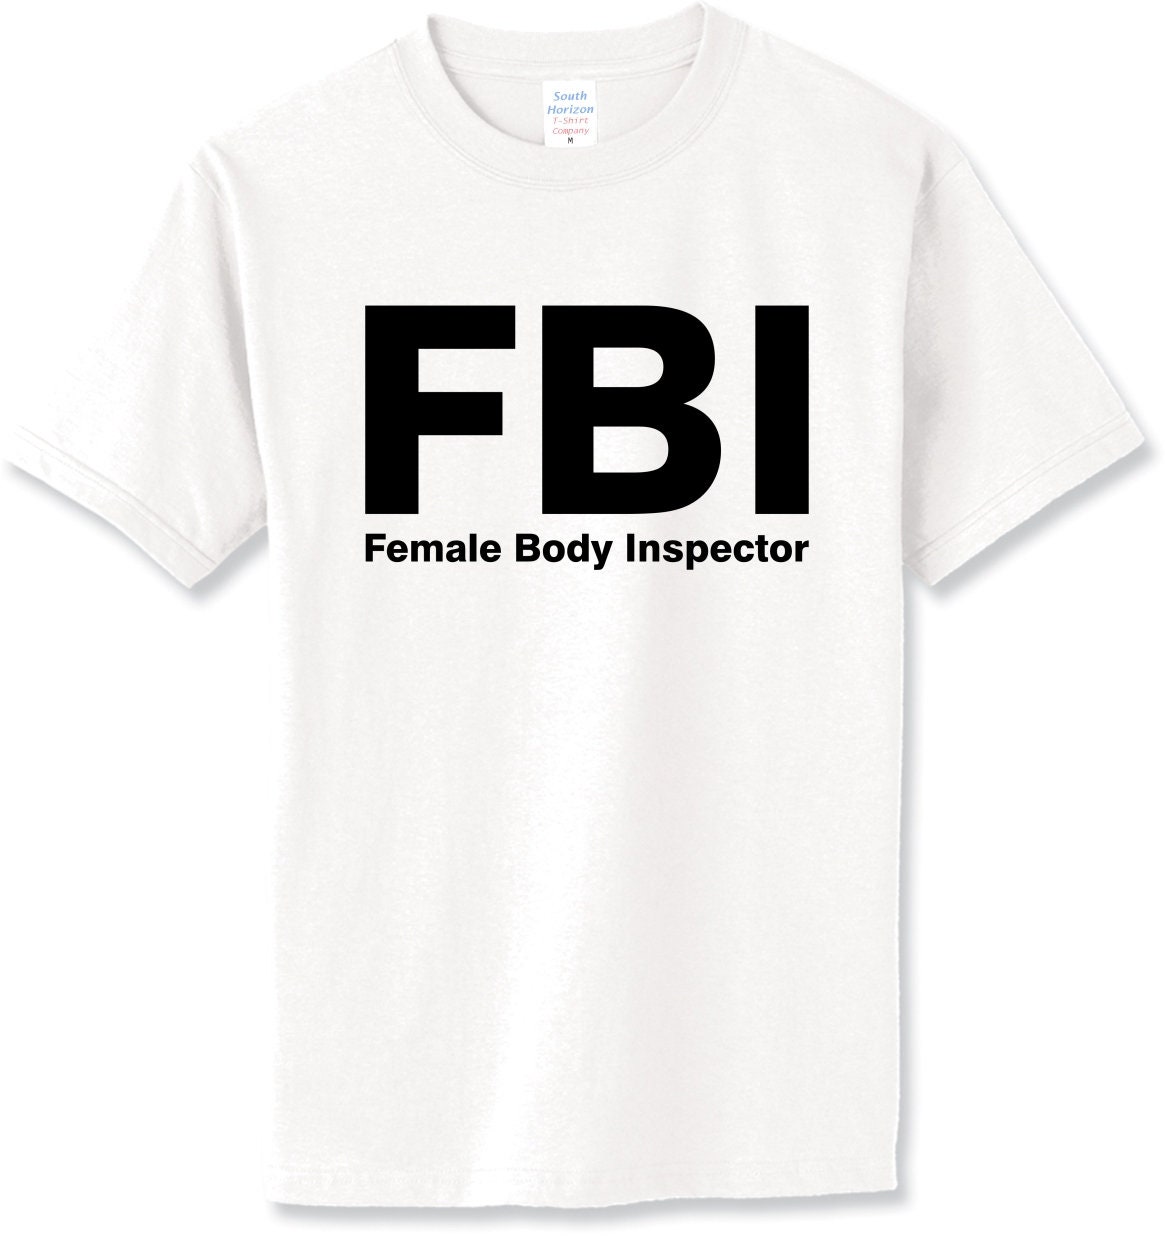 I'm Not Like Other Girls Tshirt, FBI Watchlist Shirt, Conservative Shirts  for Women 